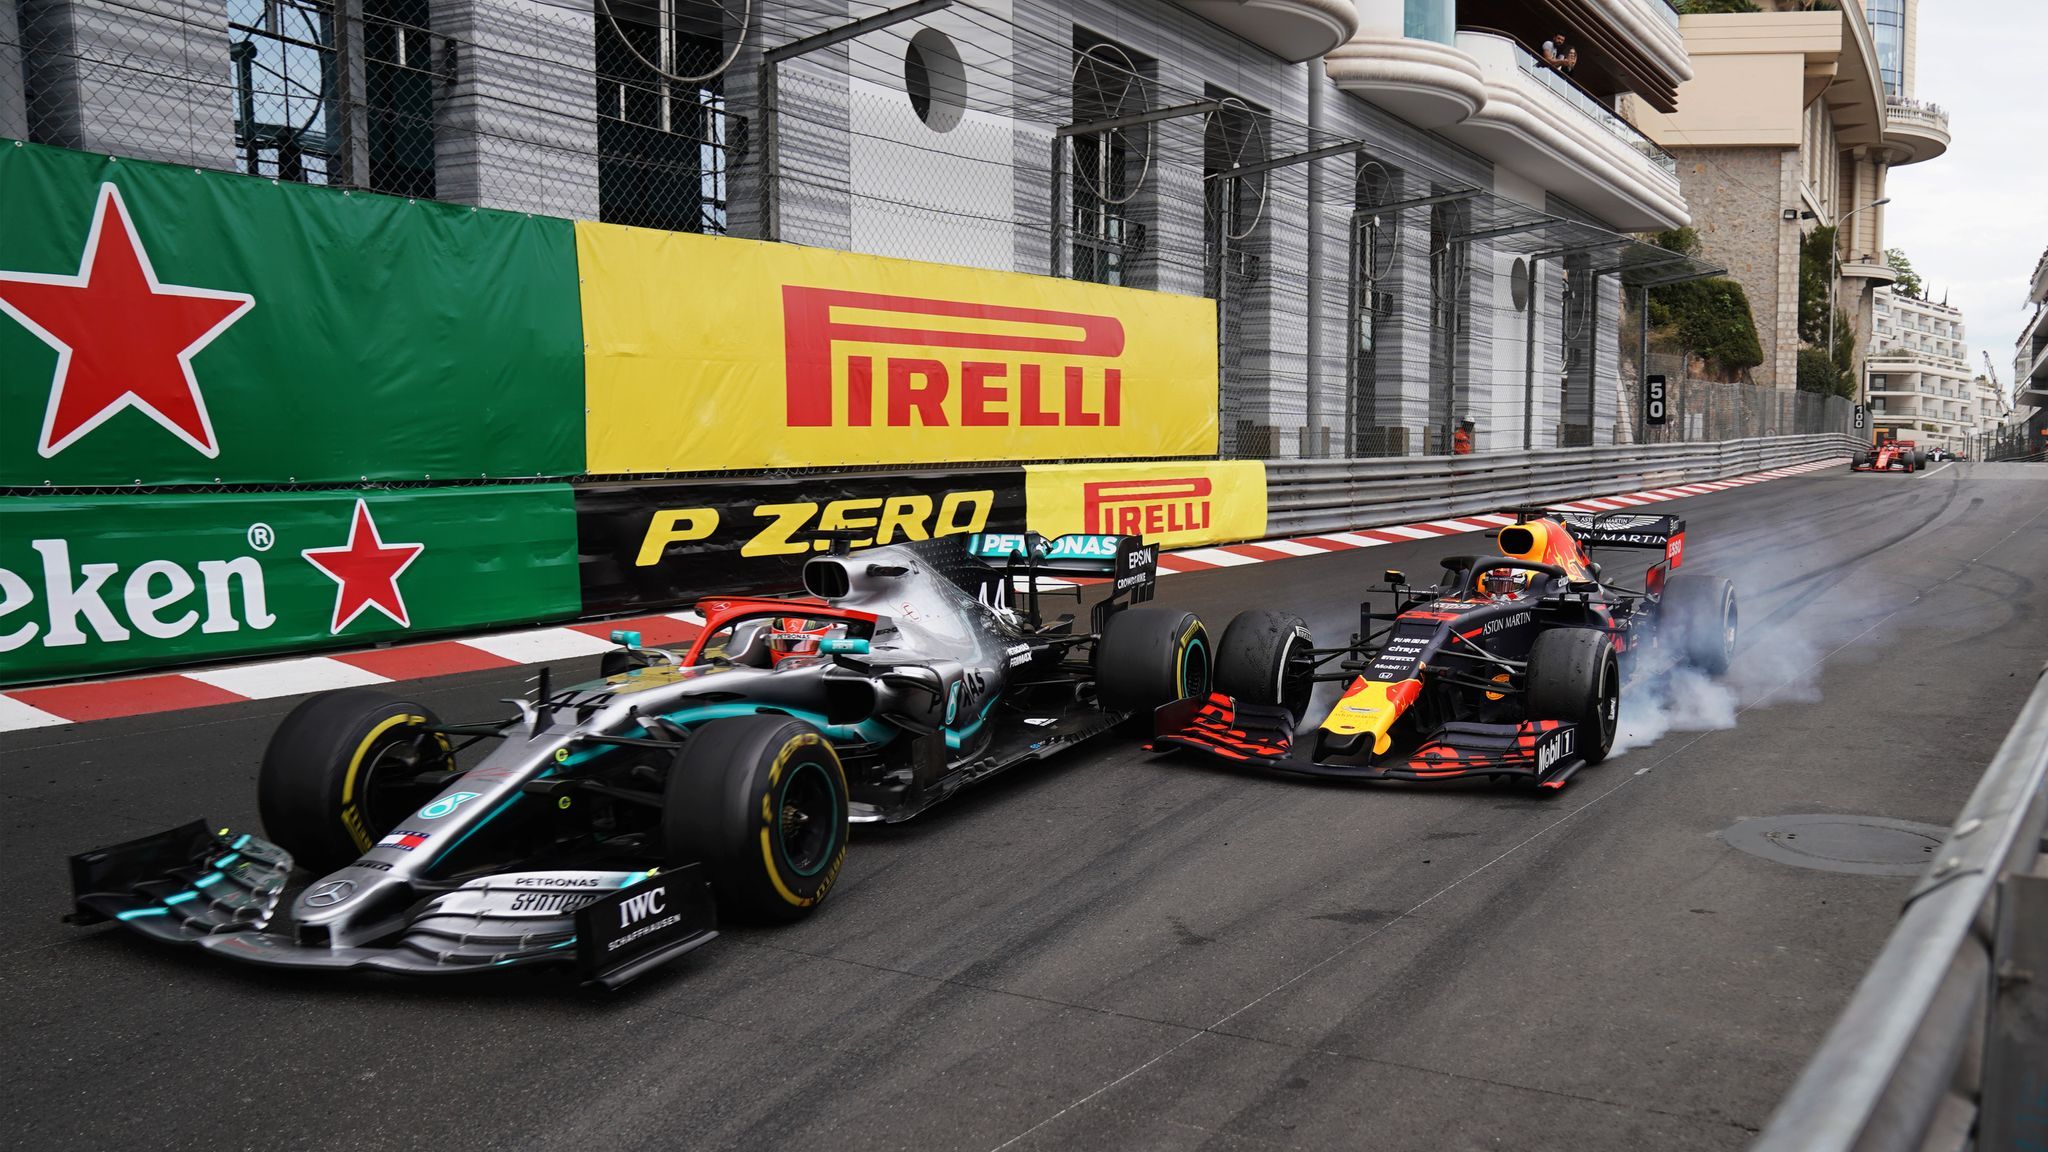 Monaco GP: F1 Returns To The World Famous Streets Of The Principality For Blockbuster Leg Of 2021 Season